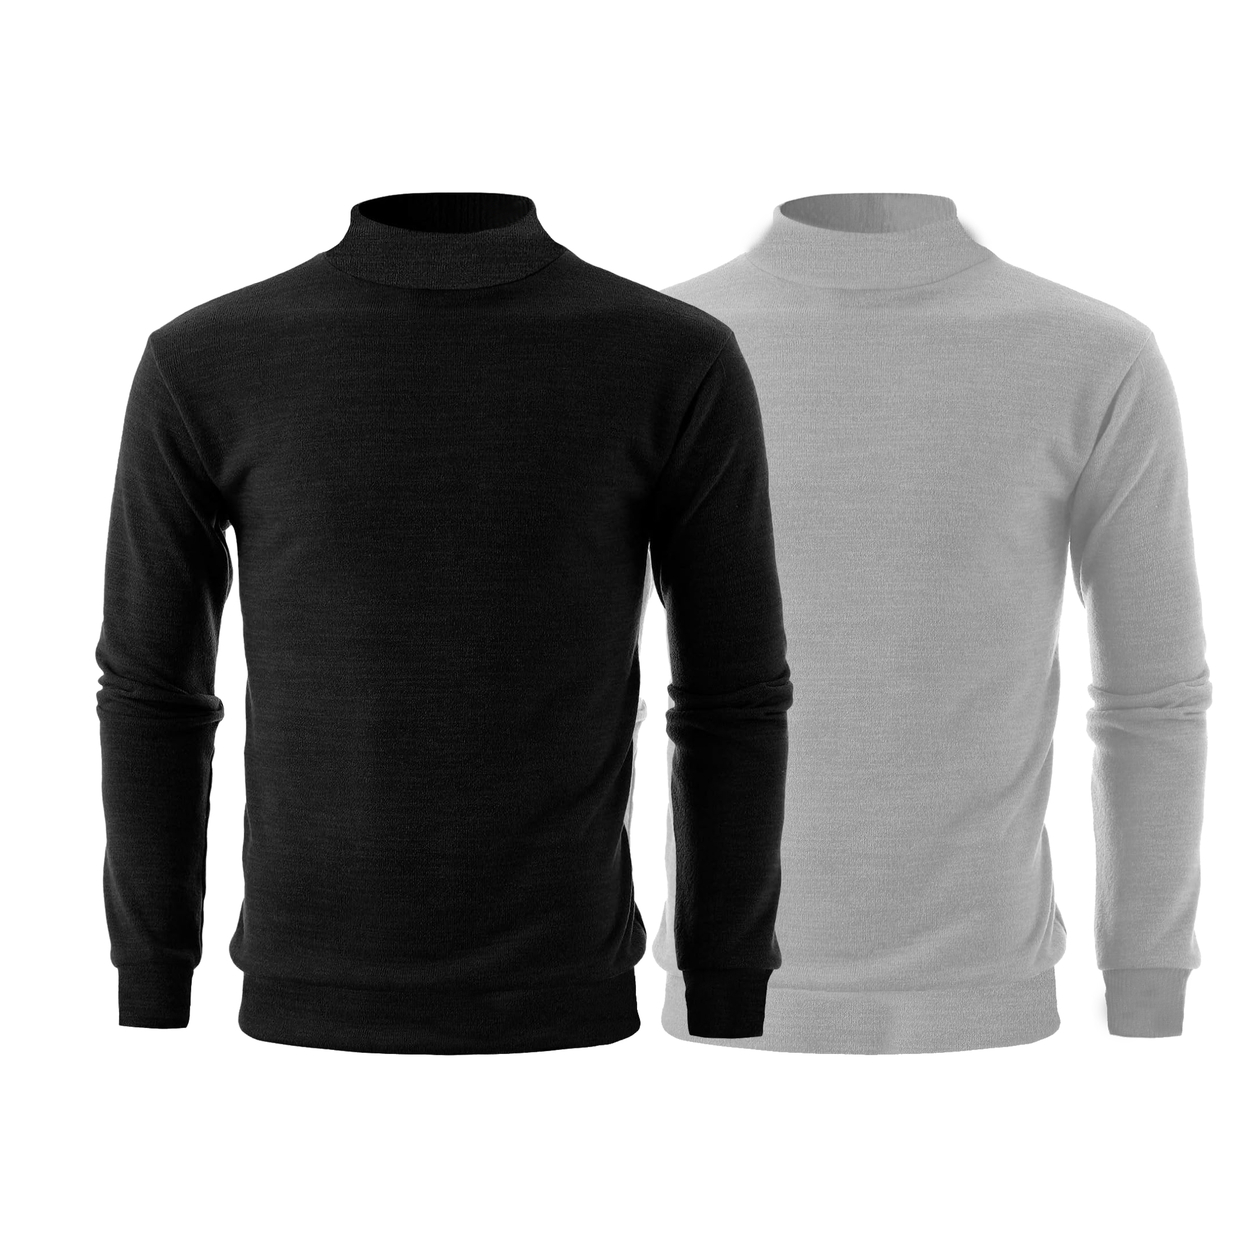 2-Pack: Men's Winter Warm Cozy Knit Slim Fit Mock Neck Sweater - Black & White, Medium